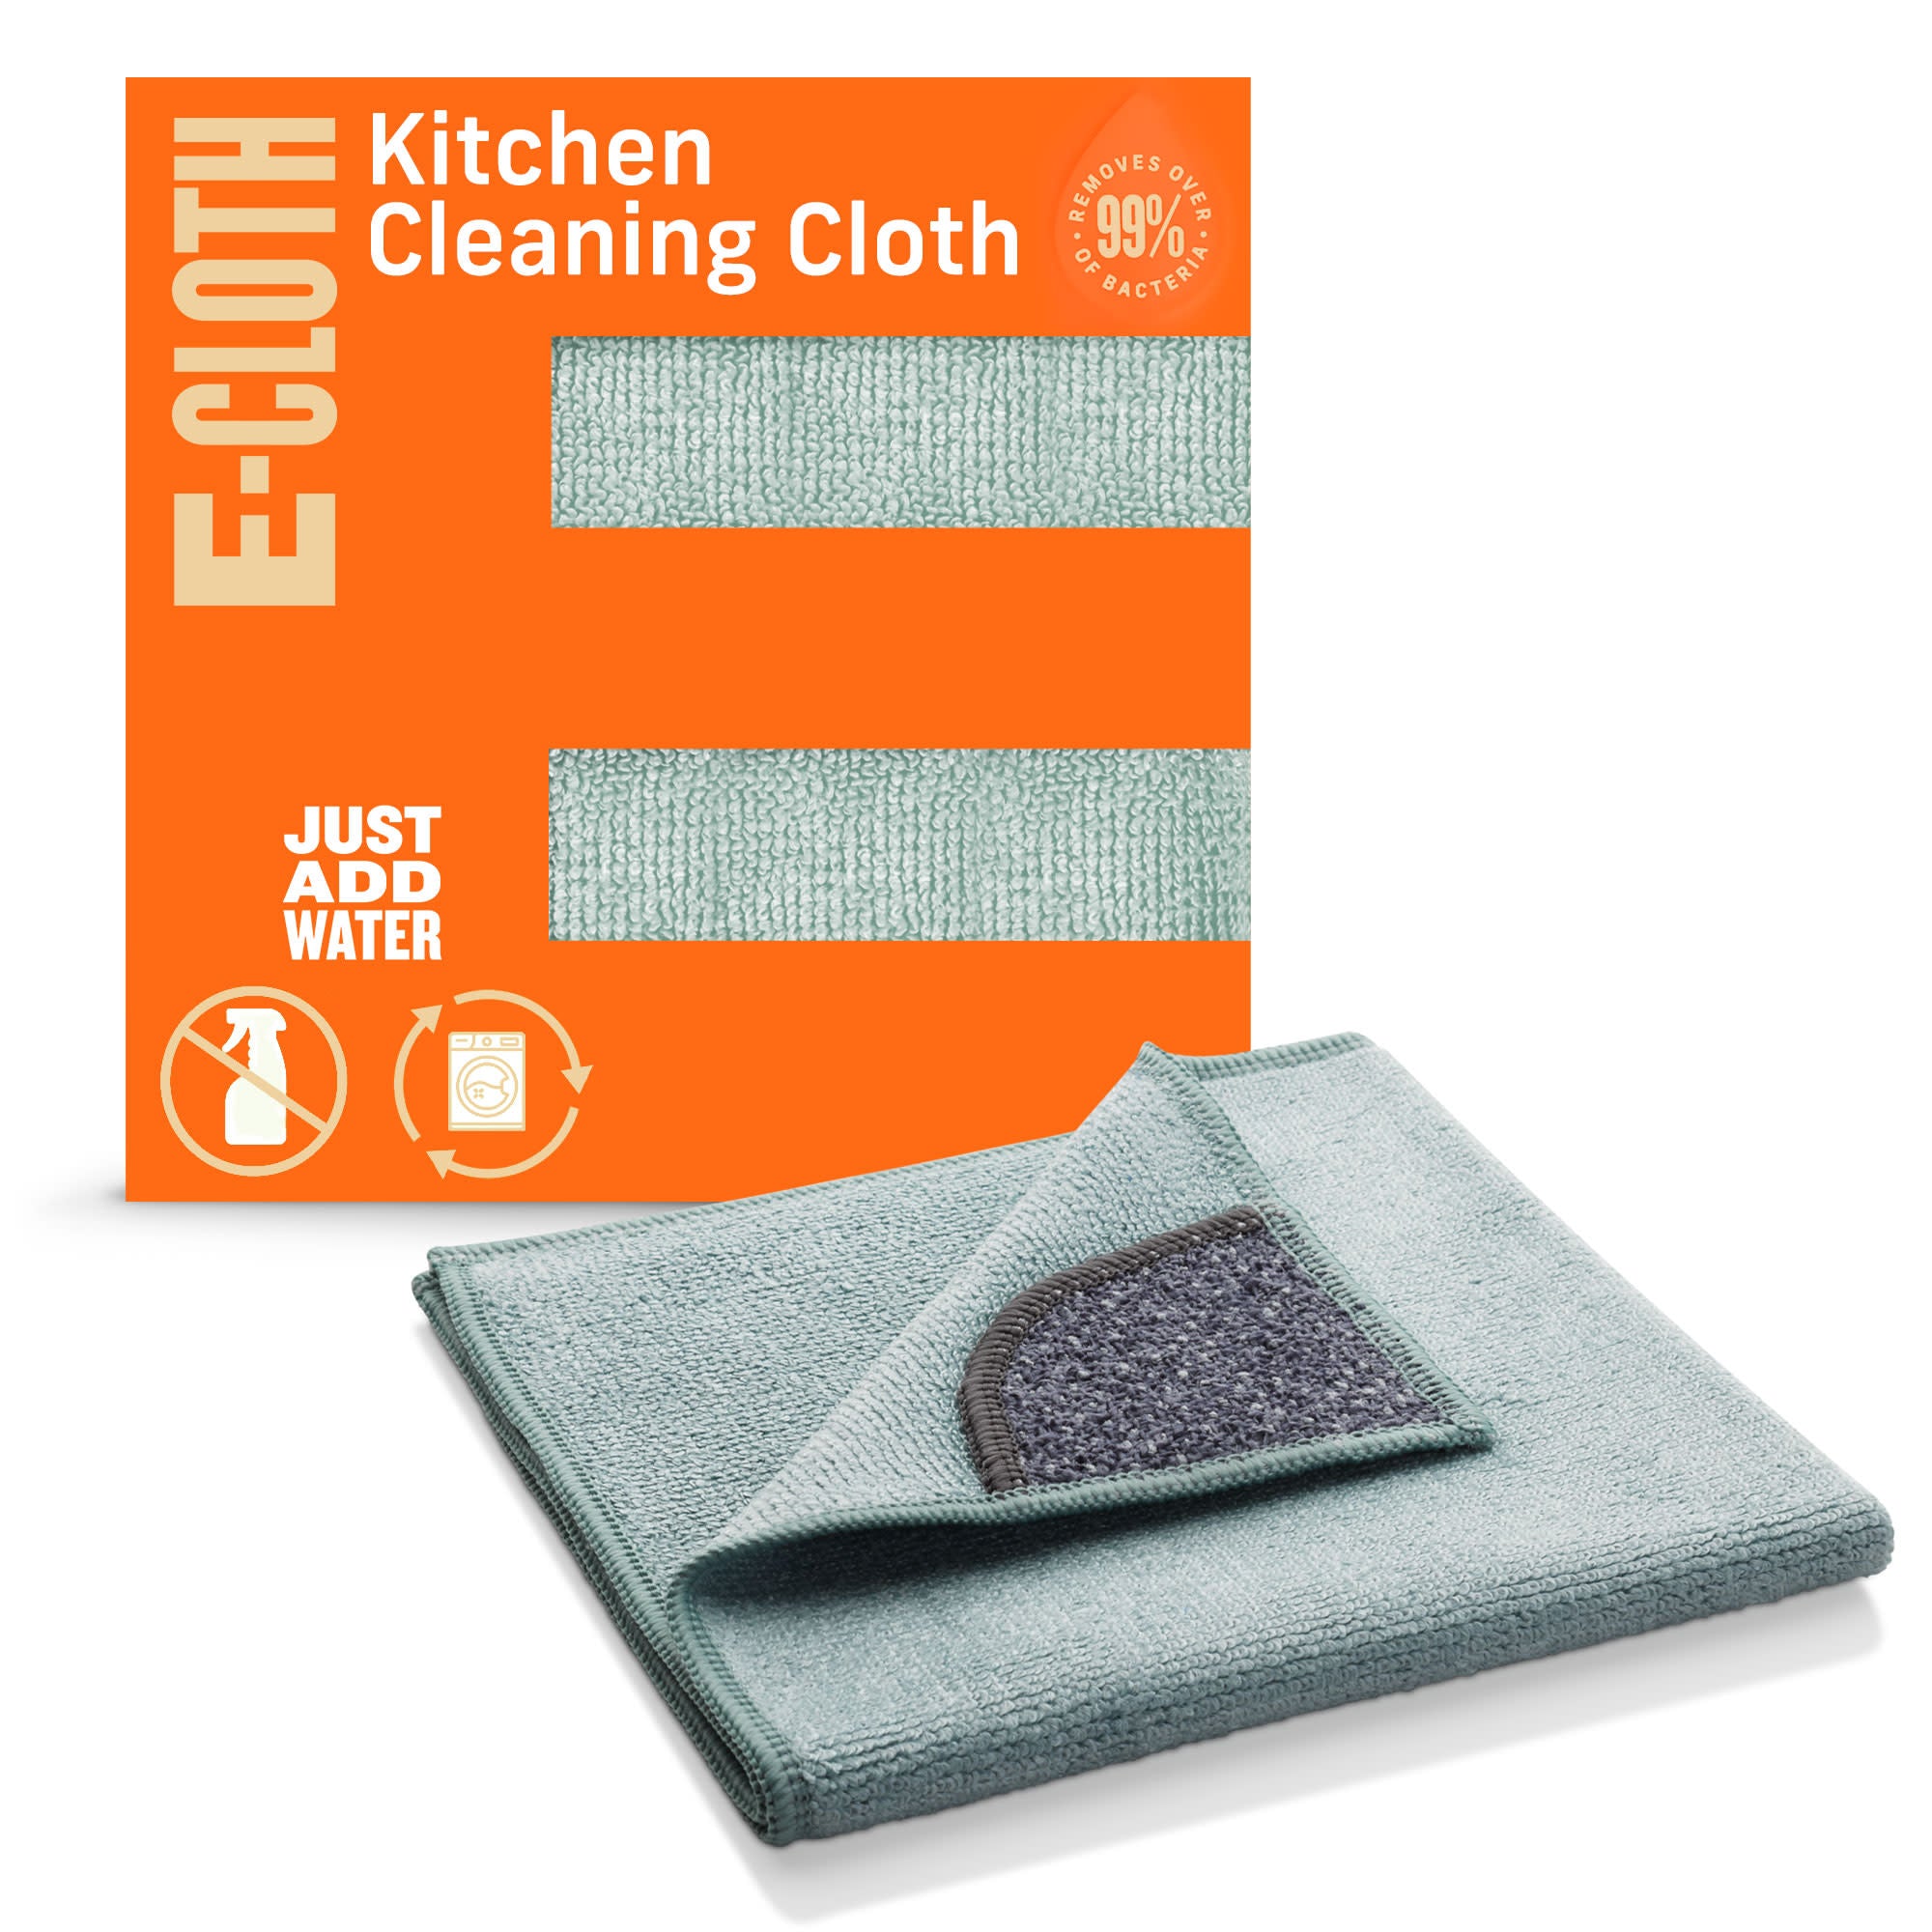 E-Cloth Kitchen Dynamo